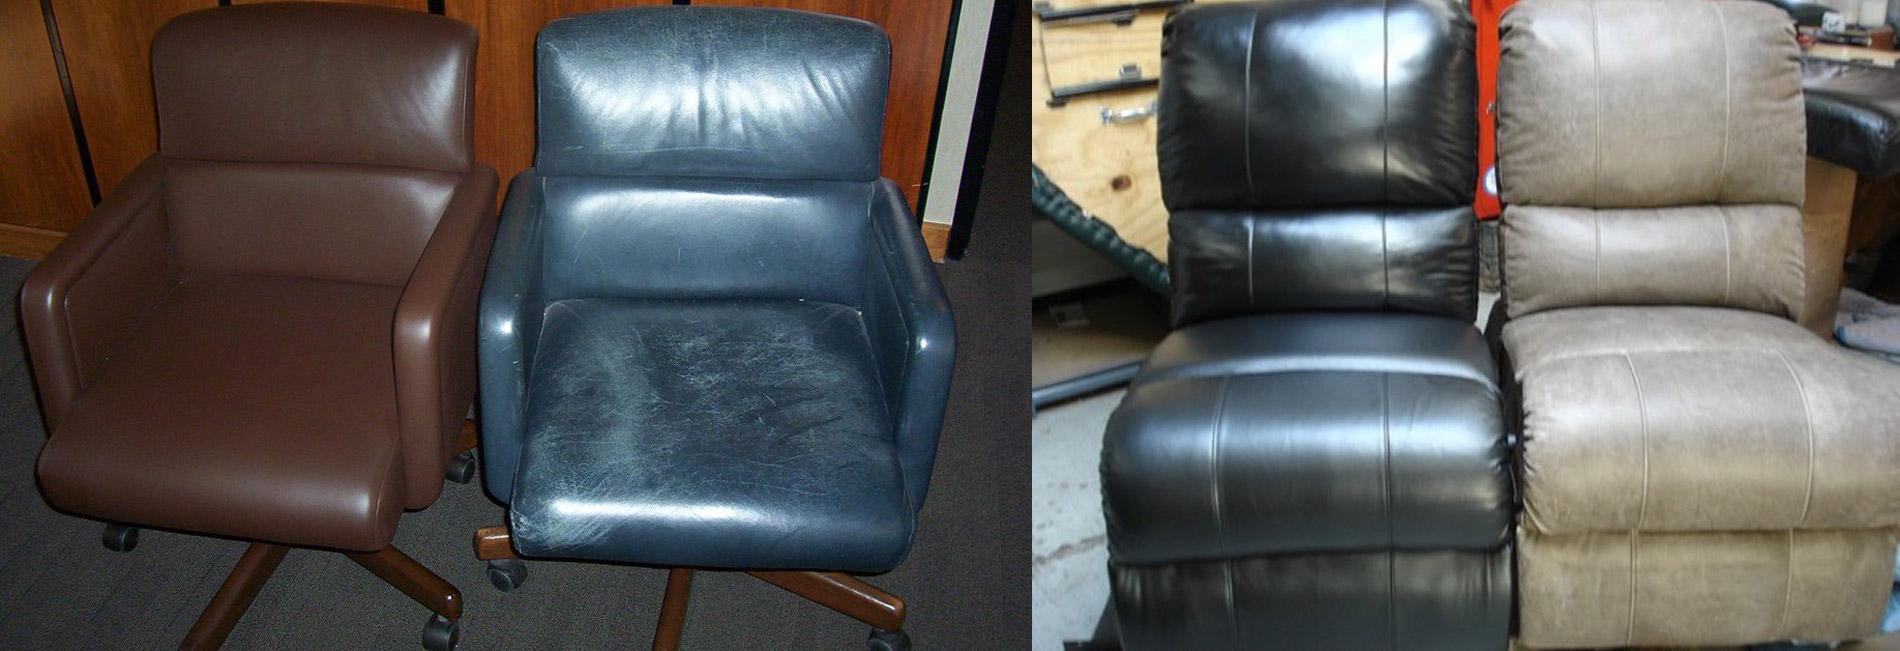 San Diego Furniture Leather Repair, Leather Sofa Repair San Diego